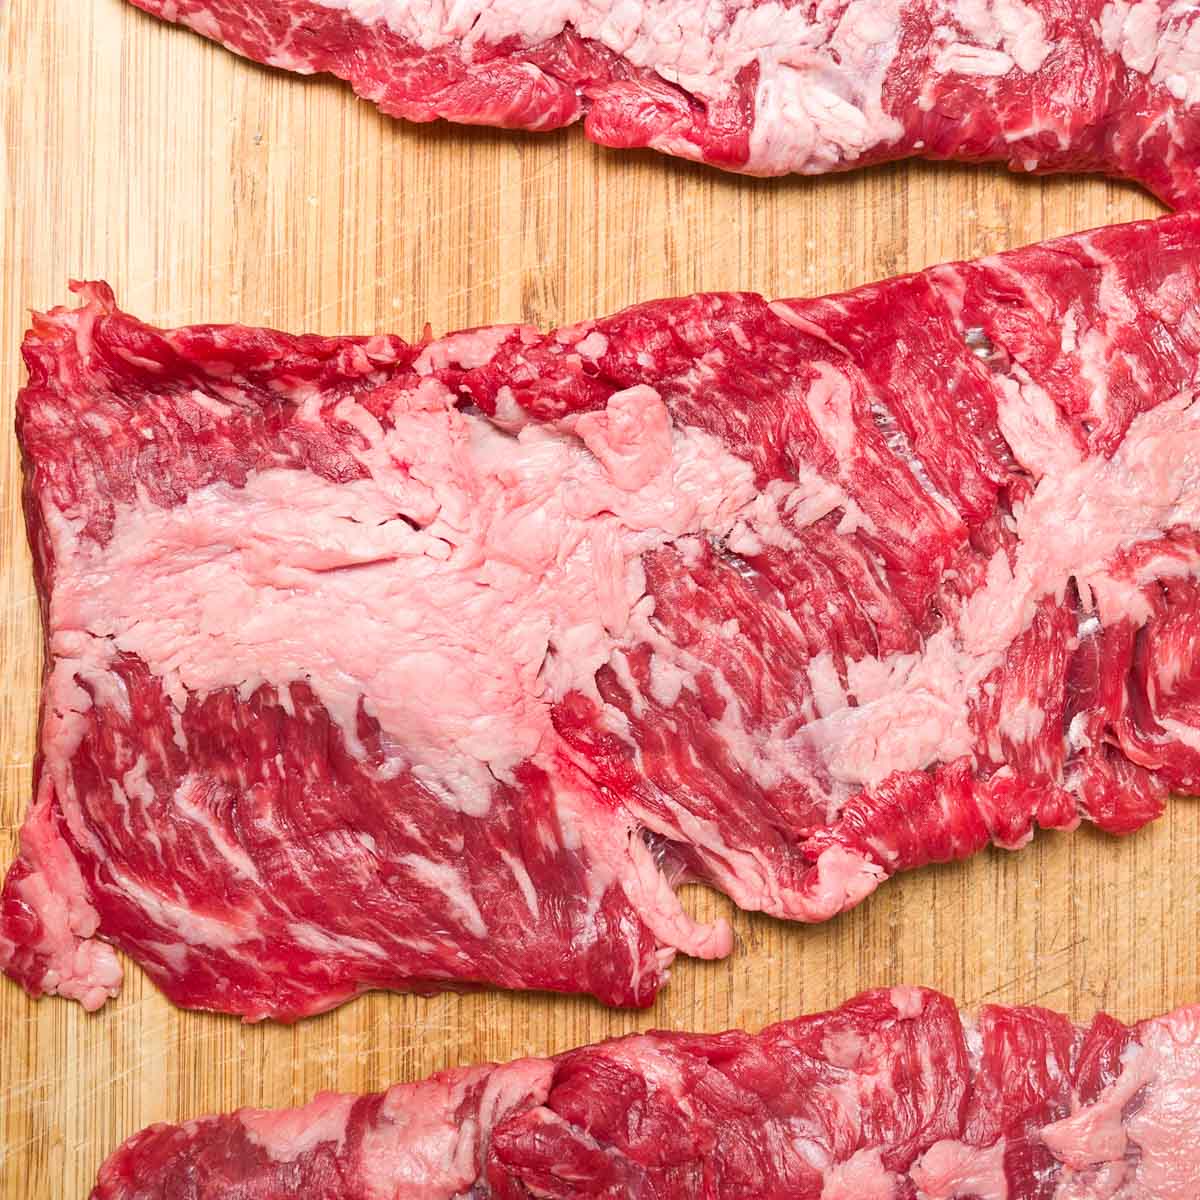 Skirt Steak vs Flap Meat: Choosing the Best Cut for Your Dish